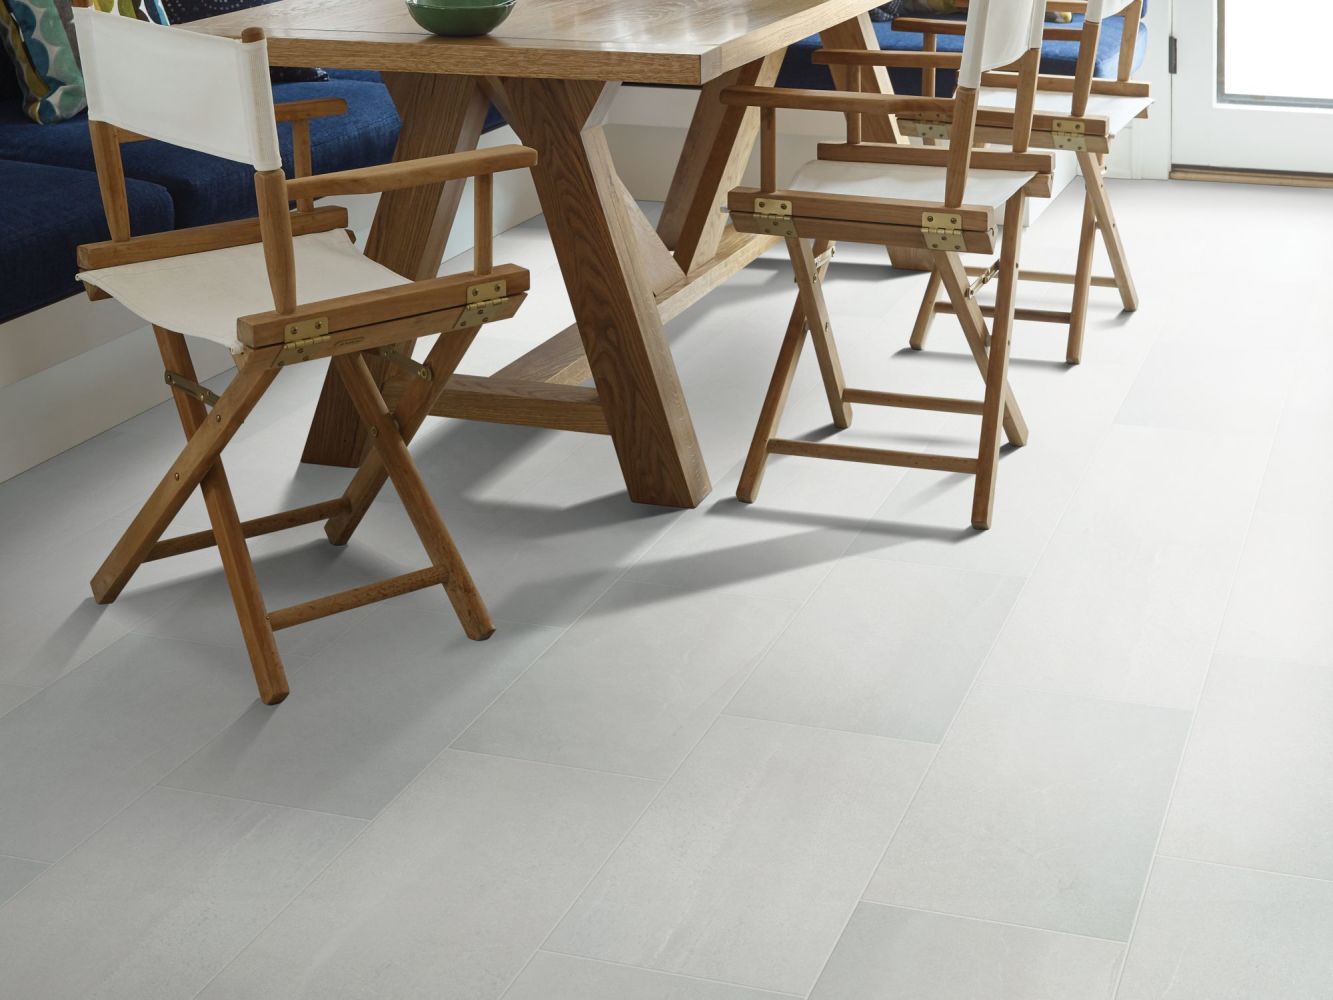 Shaw Floors Ftg Ceramic Ridgemont 12×24 White 00100_FG55A